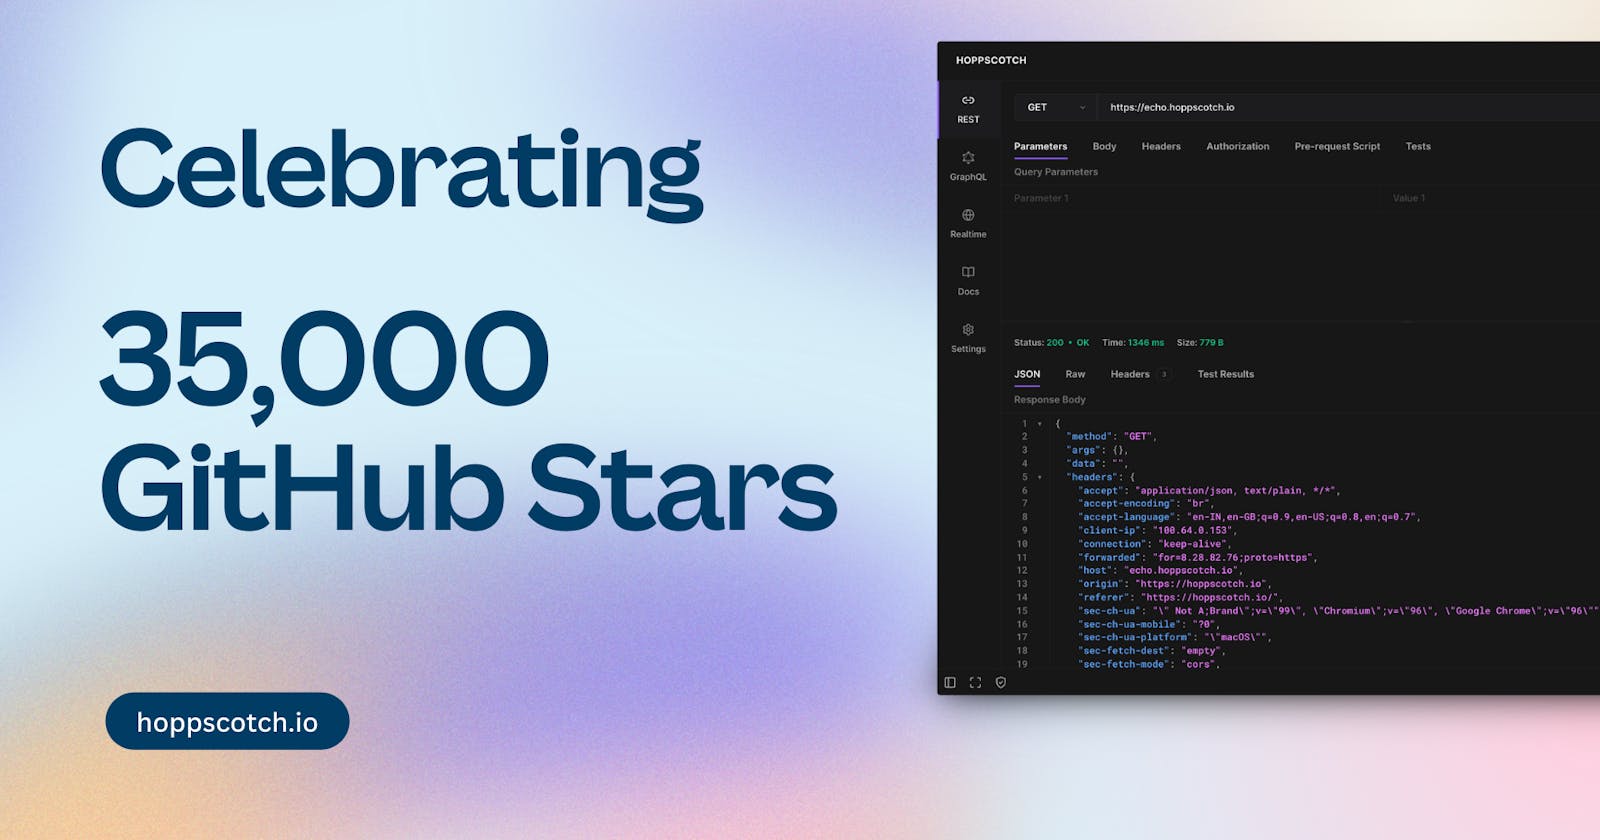 Hoppscotch is celebrating 35,000 GitHub Stars